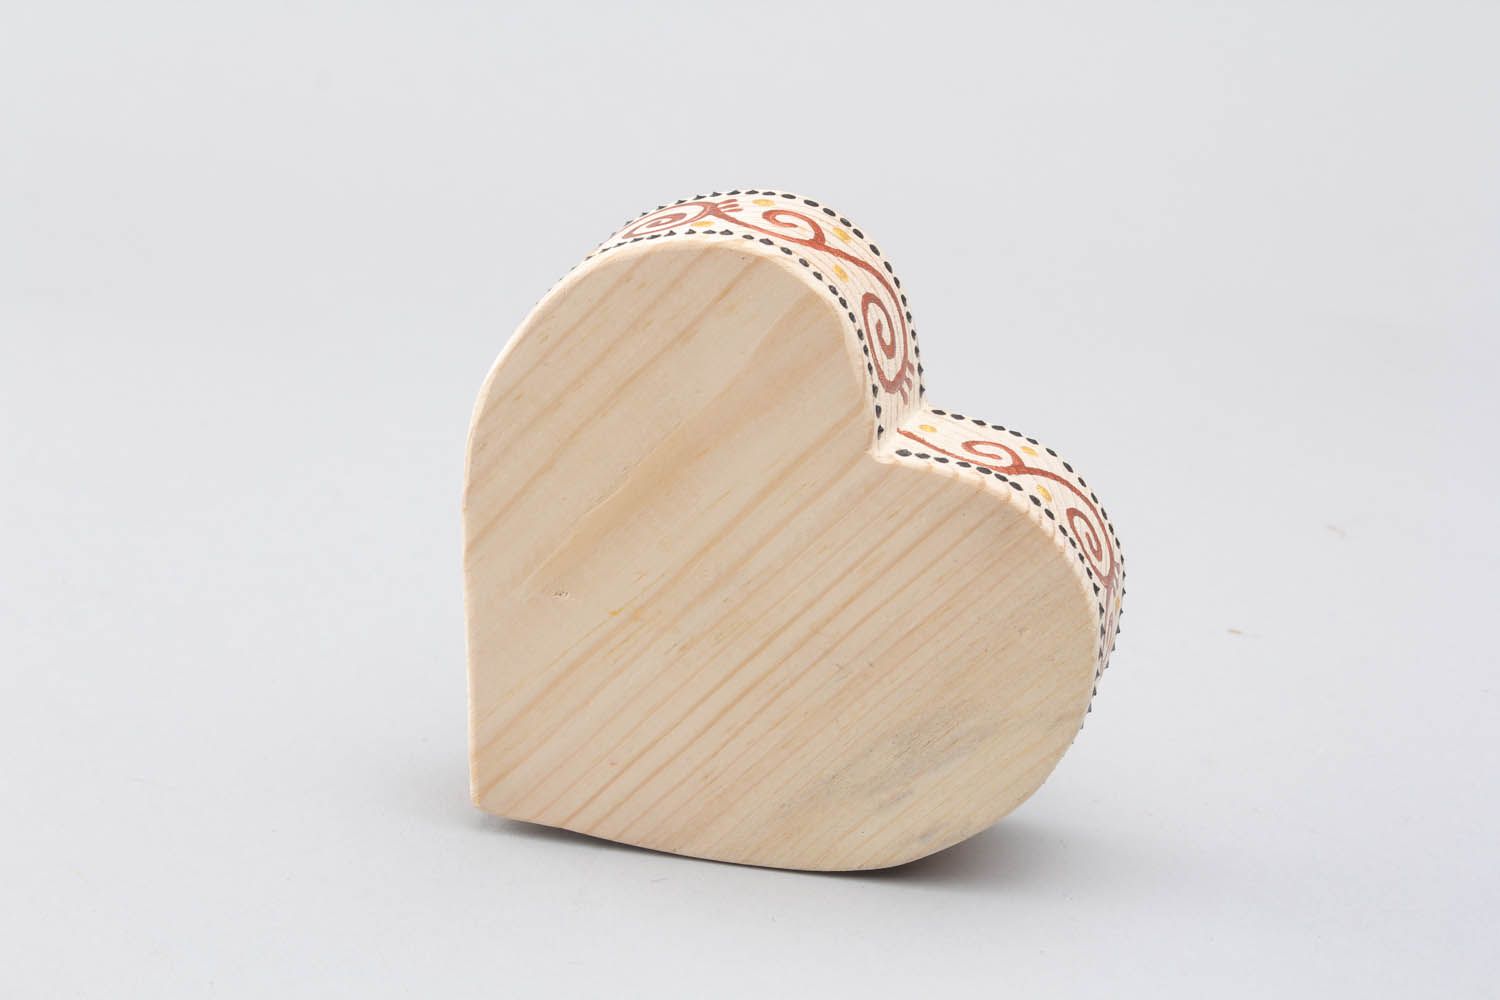 Heart-shaped wooden candlestick photo 1